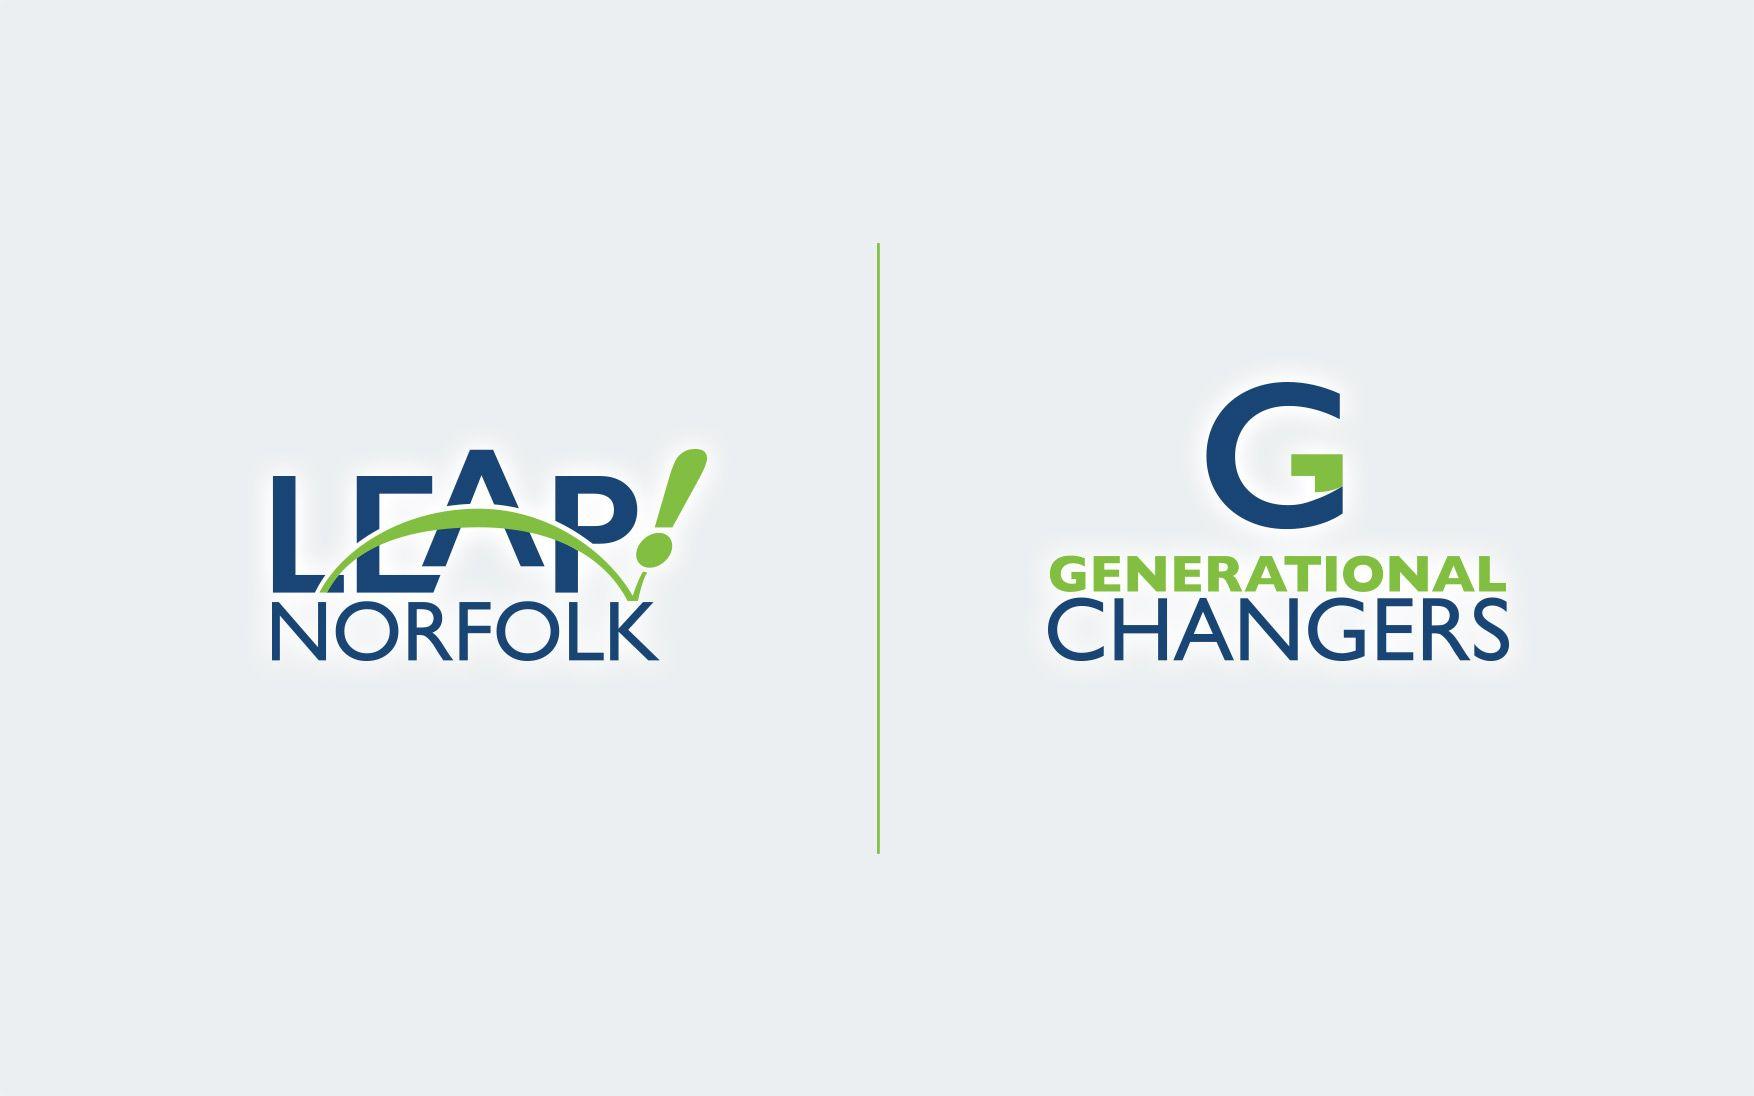 Leap Logo - Generational Changers/LEAP Norfolk logos | Evolv Design